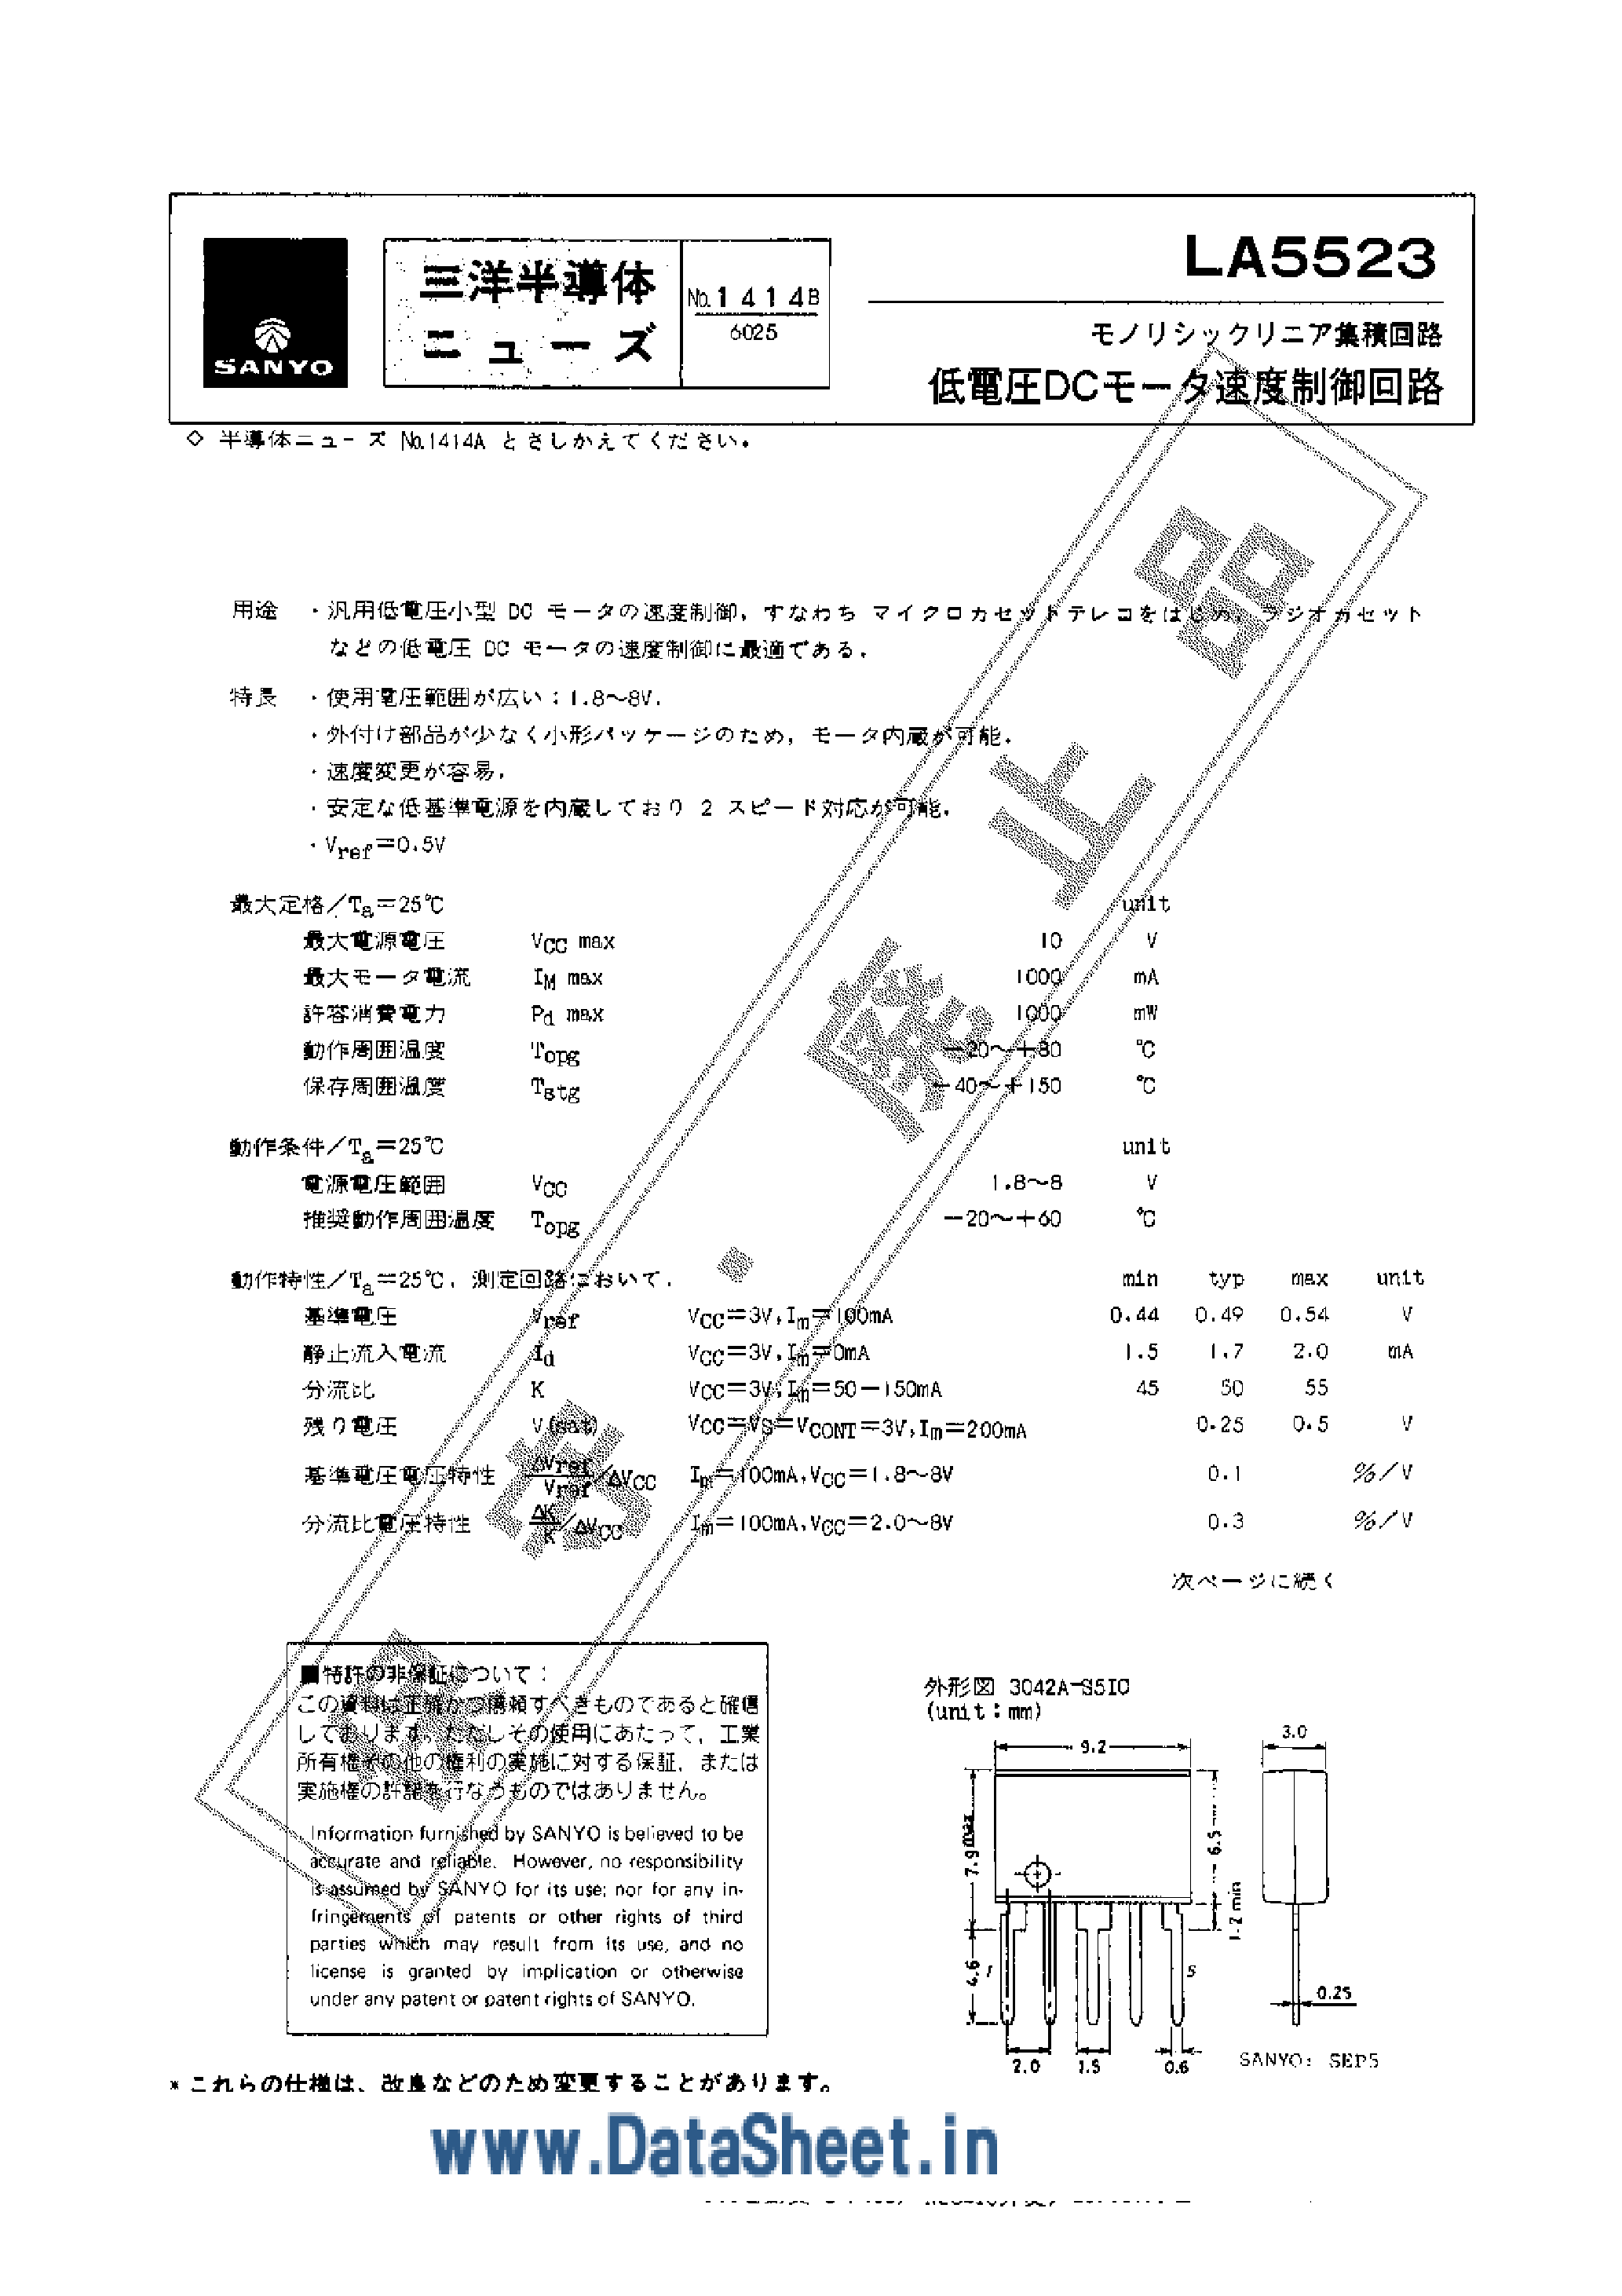 Даташит LA5523-LOW-VOLTAGE DC MOTOR SPEED CONTROLLER (Japanese) страница 1